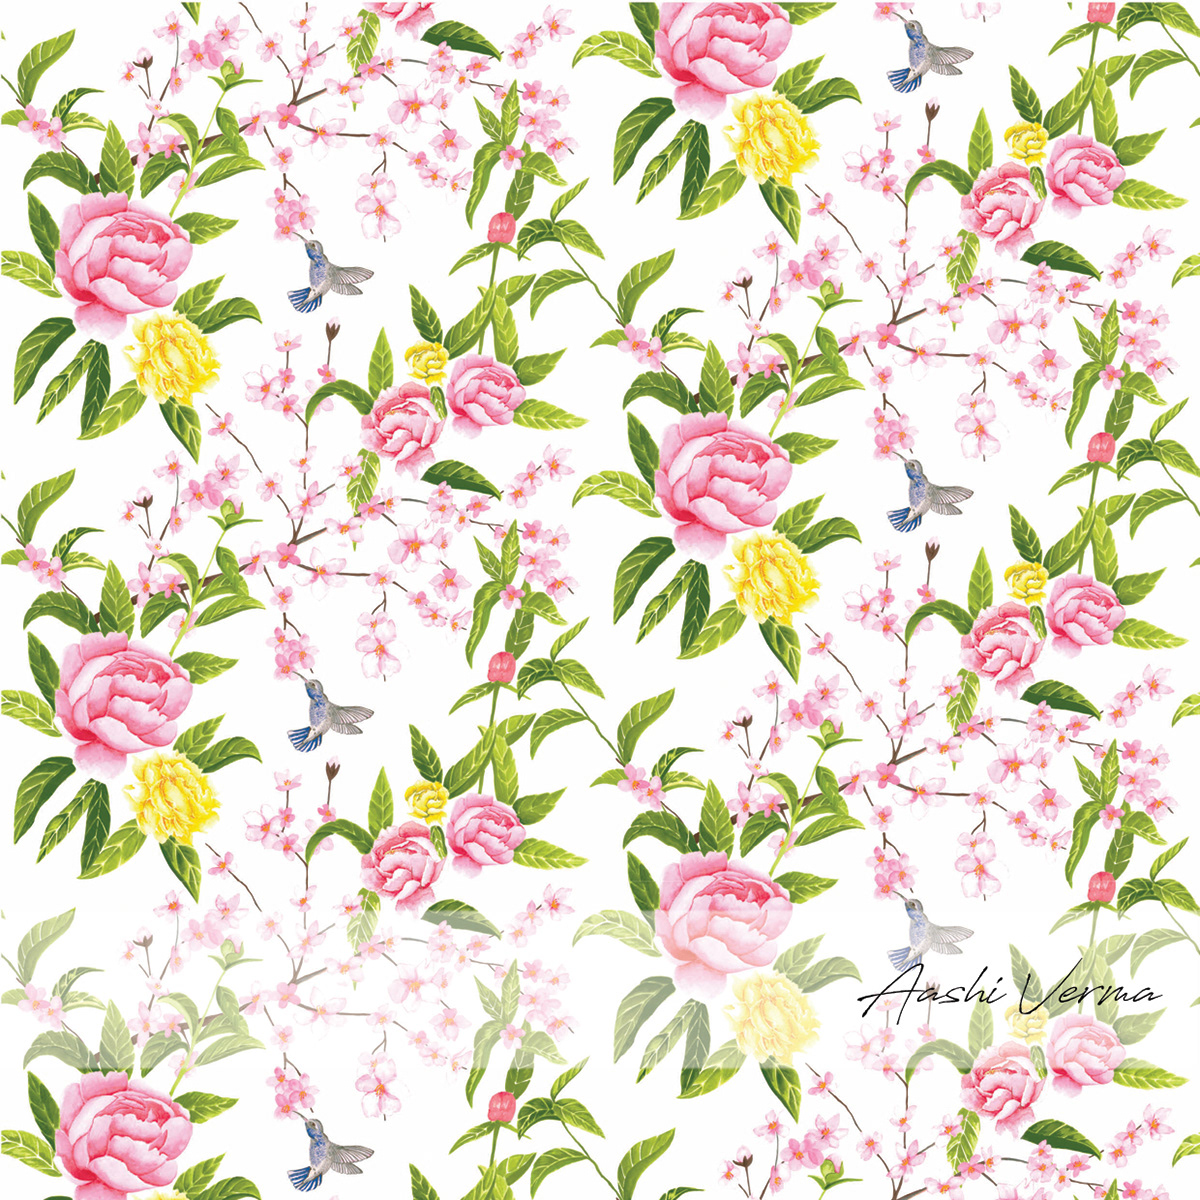 print design  Watercolours florals textile design  peonies handskills humming bird Cherry Blossom surface prints